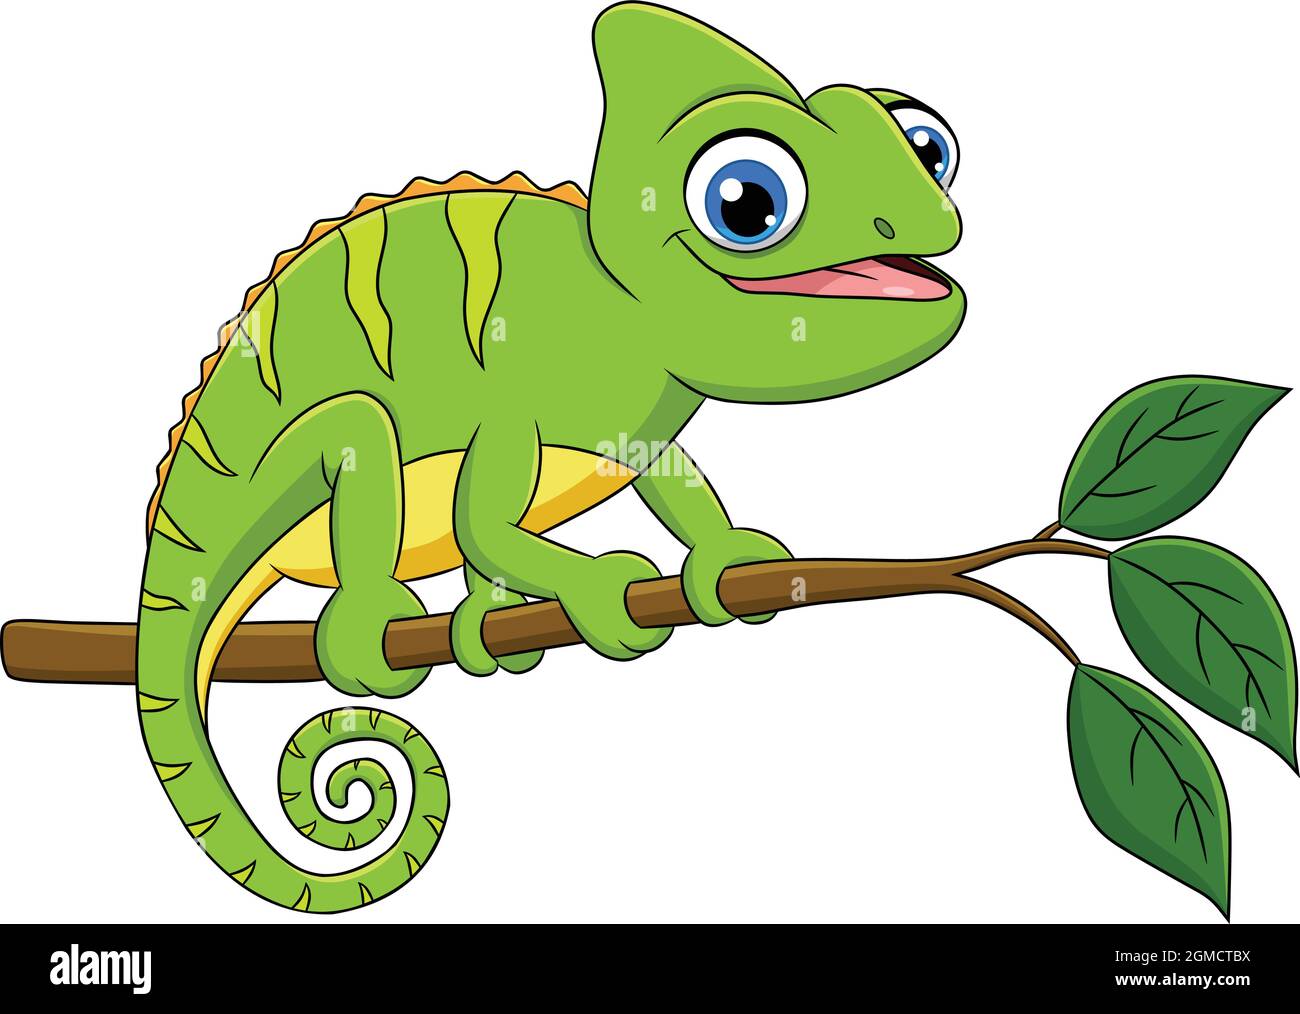 Cute Chameleon cartoon vector illustration Stock Vector